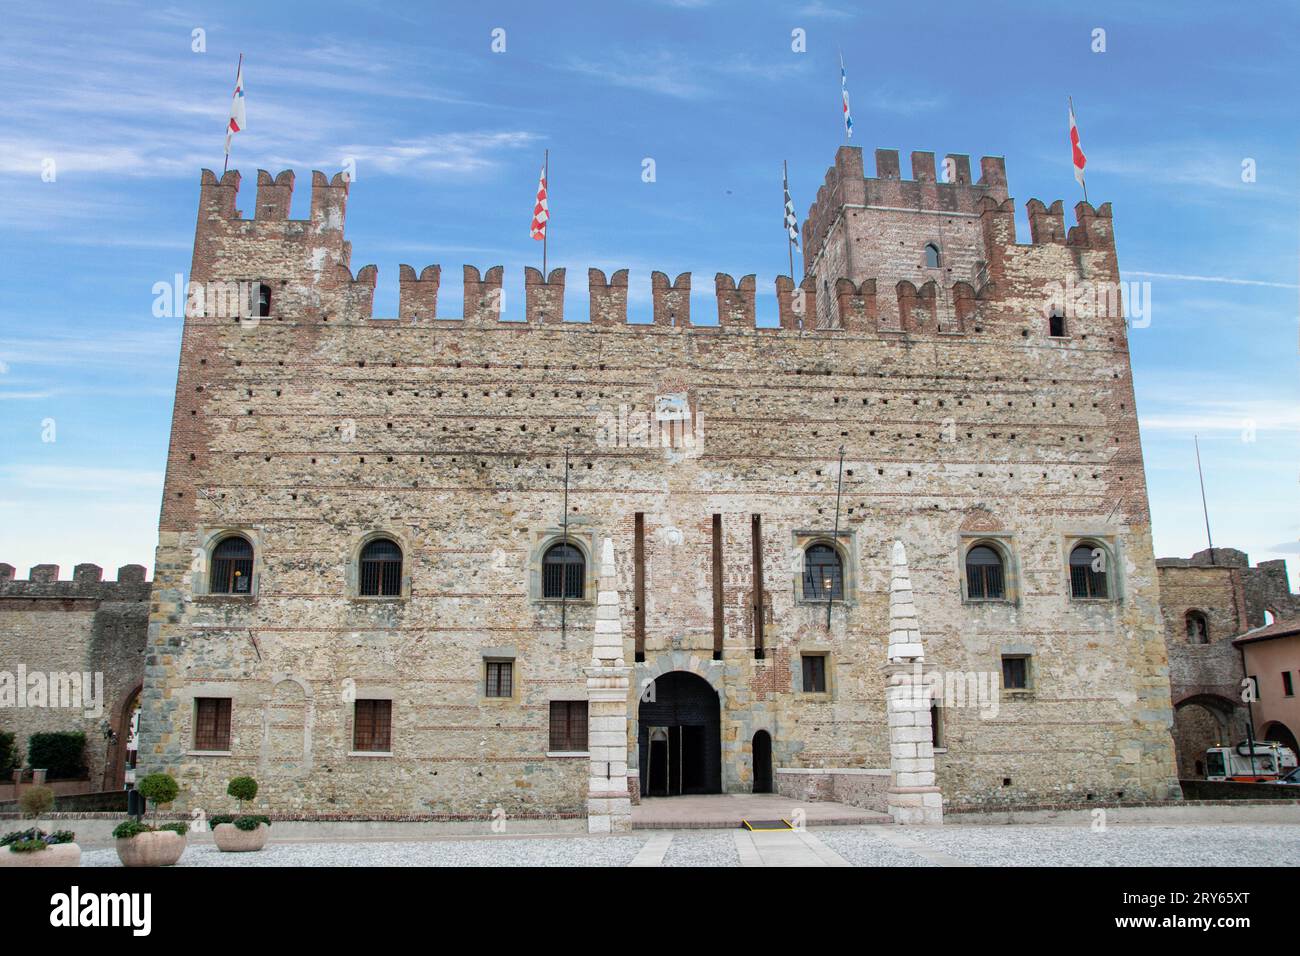 the lower castle of Marostica, Veneto, Italy Stock Photo